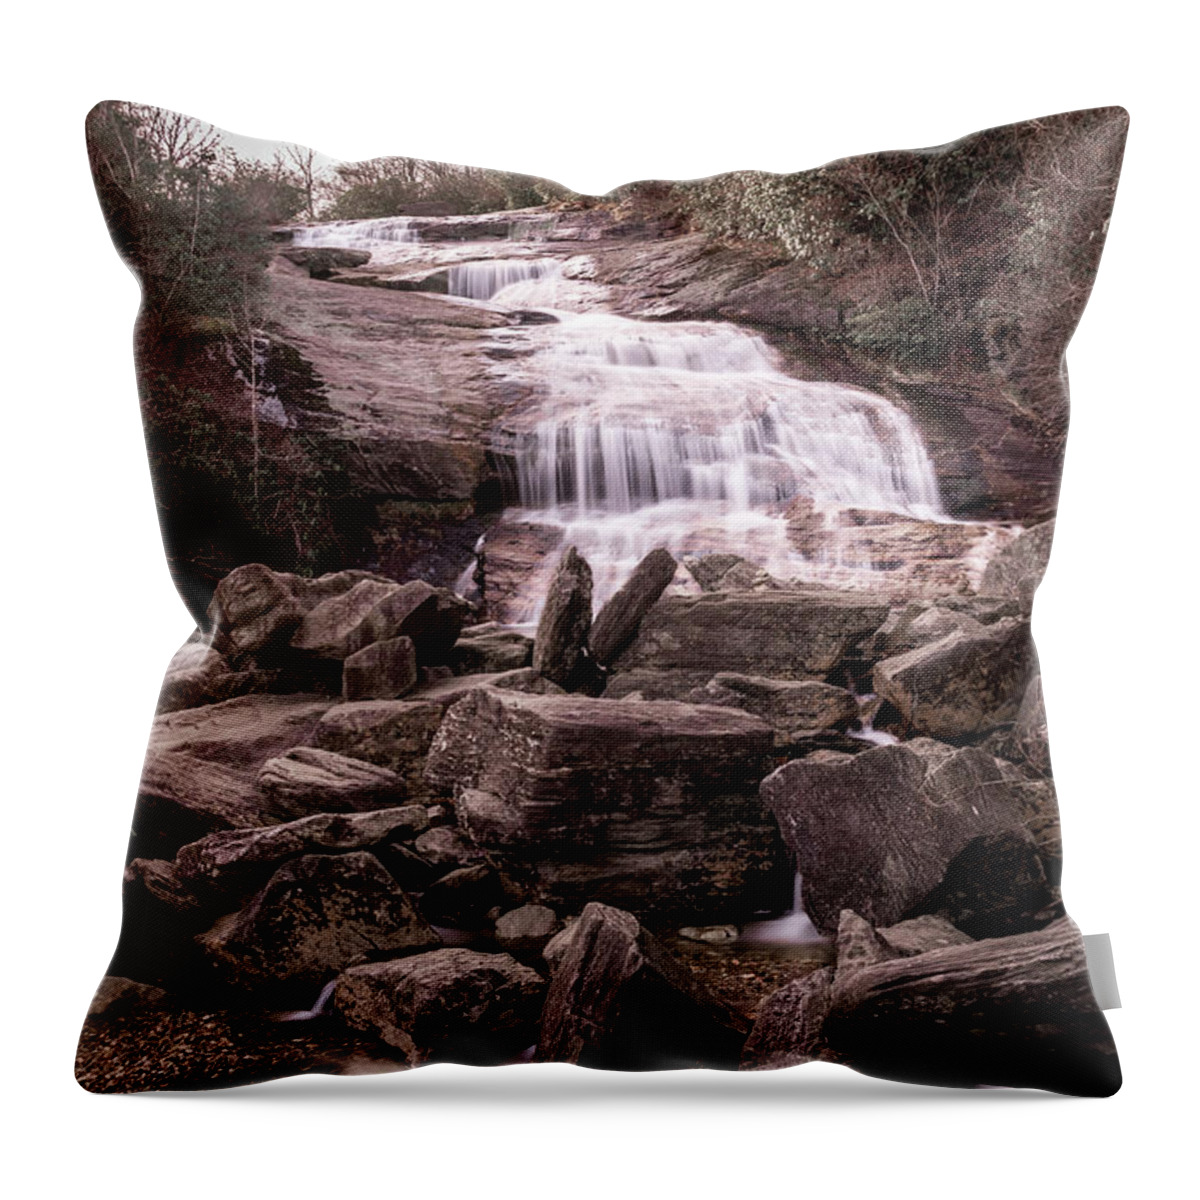 Water Falls Throw Pillow featuring the photograph Graveyard Fields Falls by Jaime Mercado